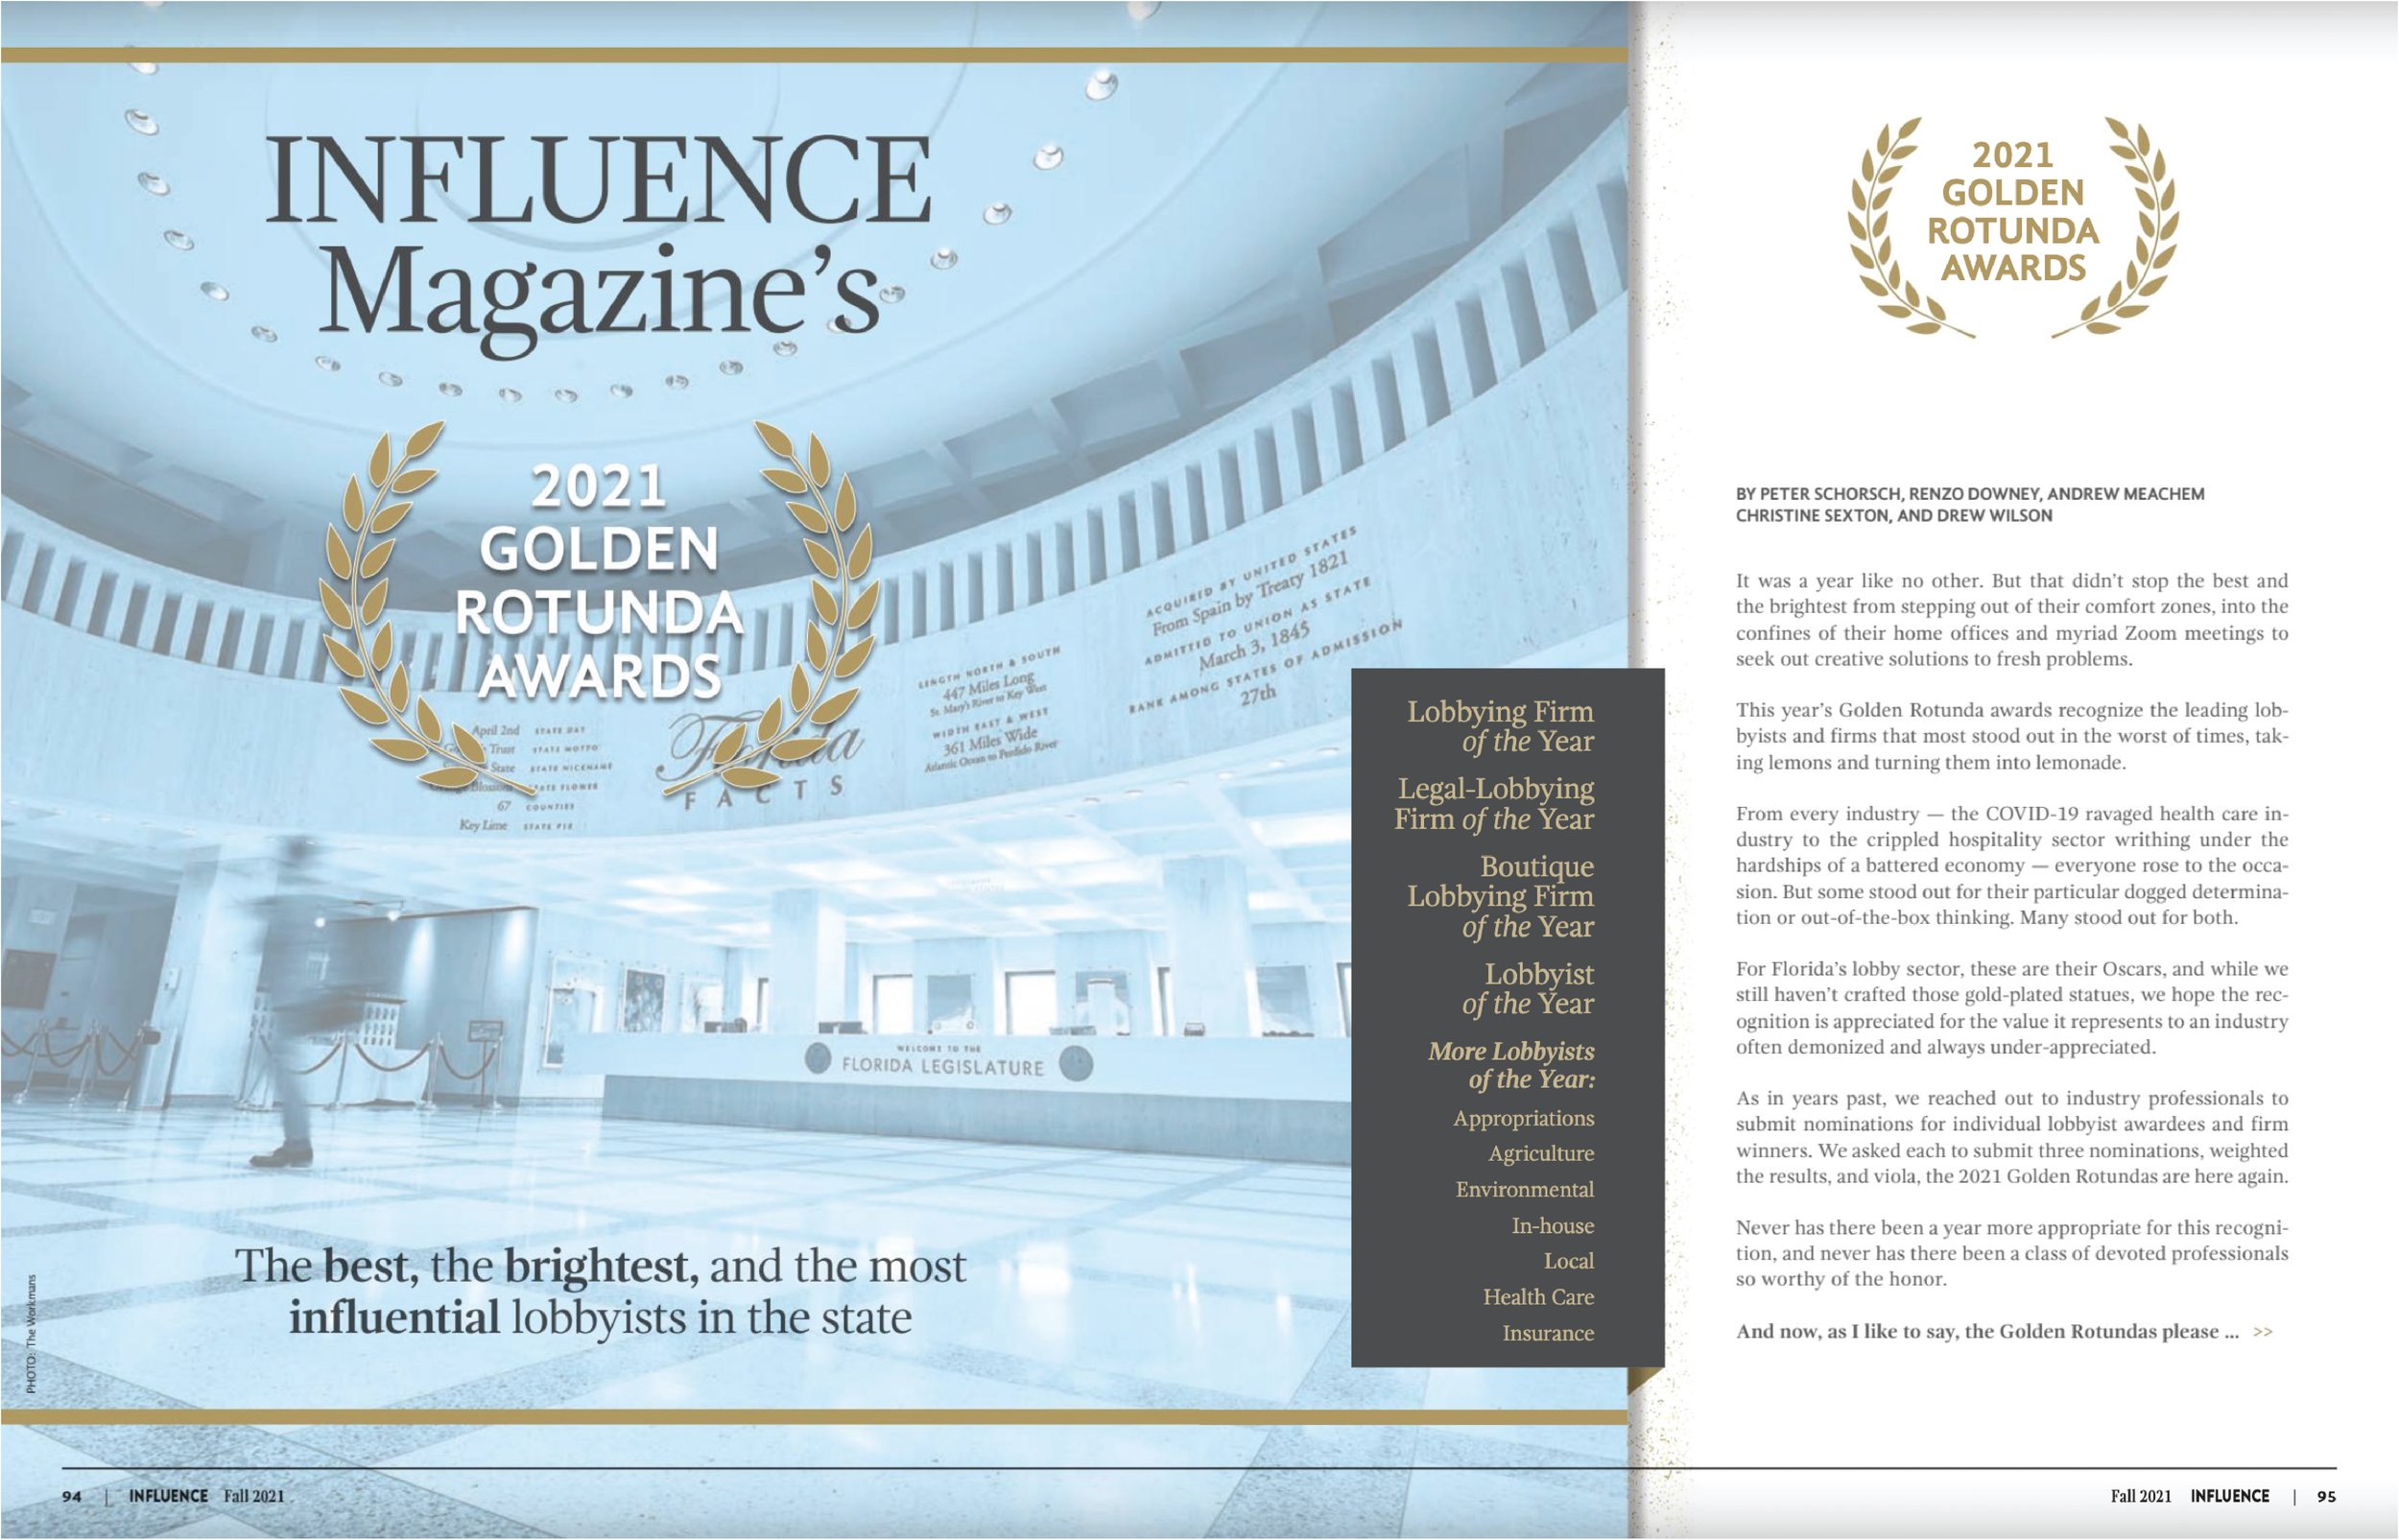 INFLUENCE Magazine Fall 2021 Golden Rotunda Awards by Alex Workman